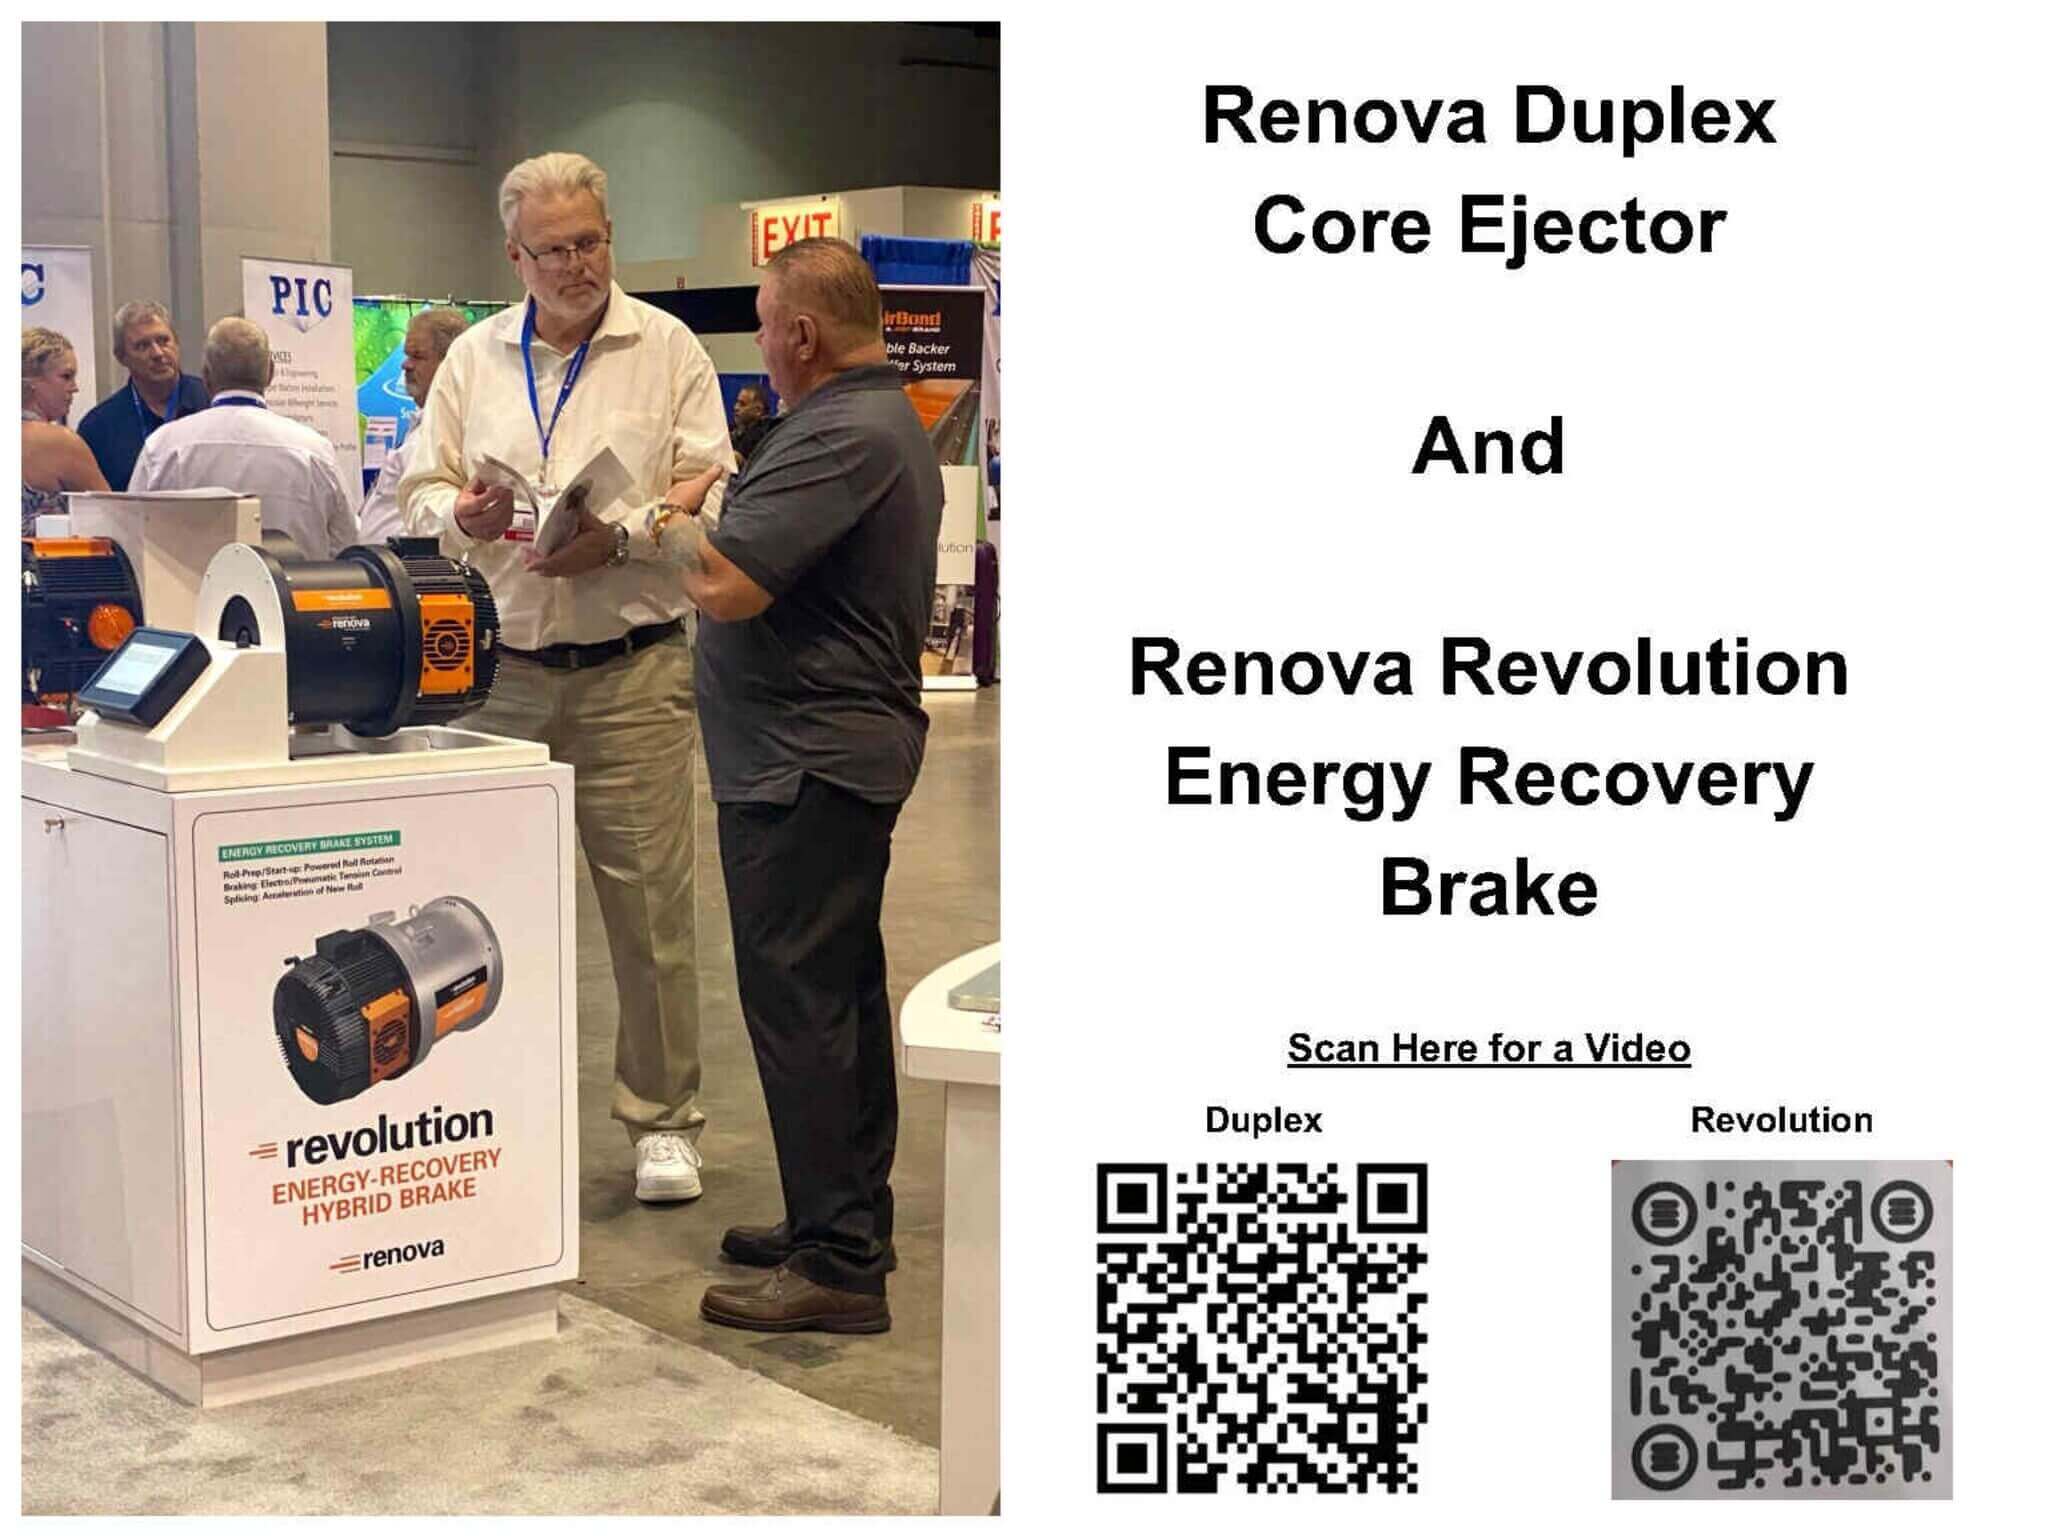 Scan Code for Renova Revolution Energy Recovery Brake System